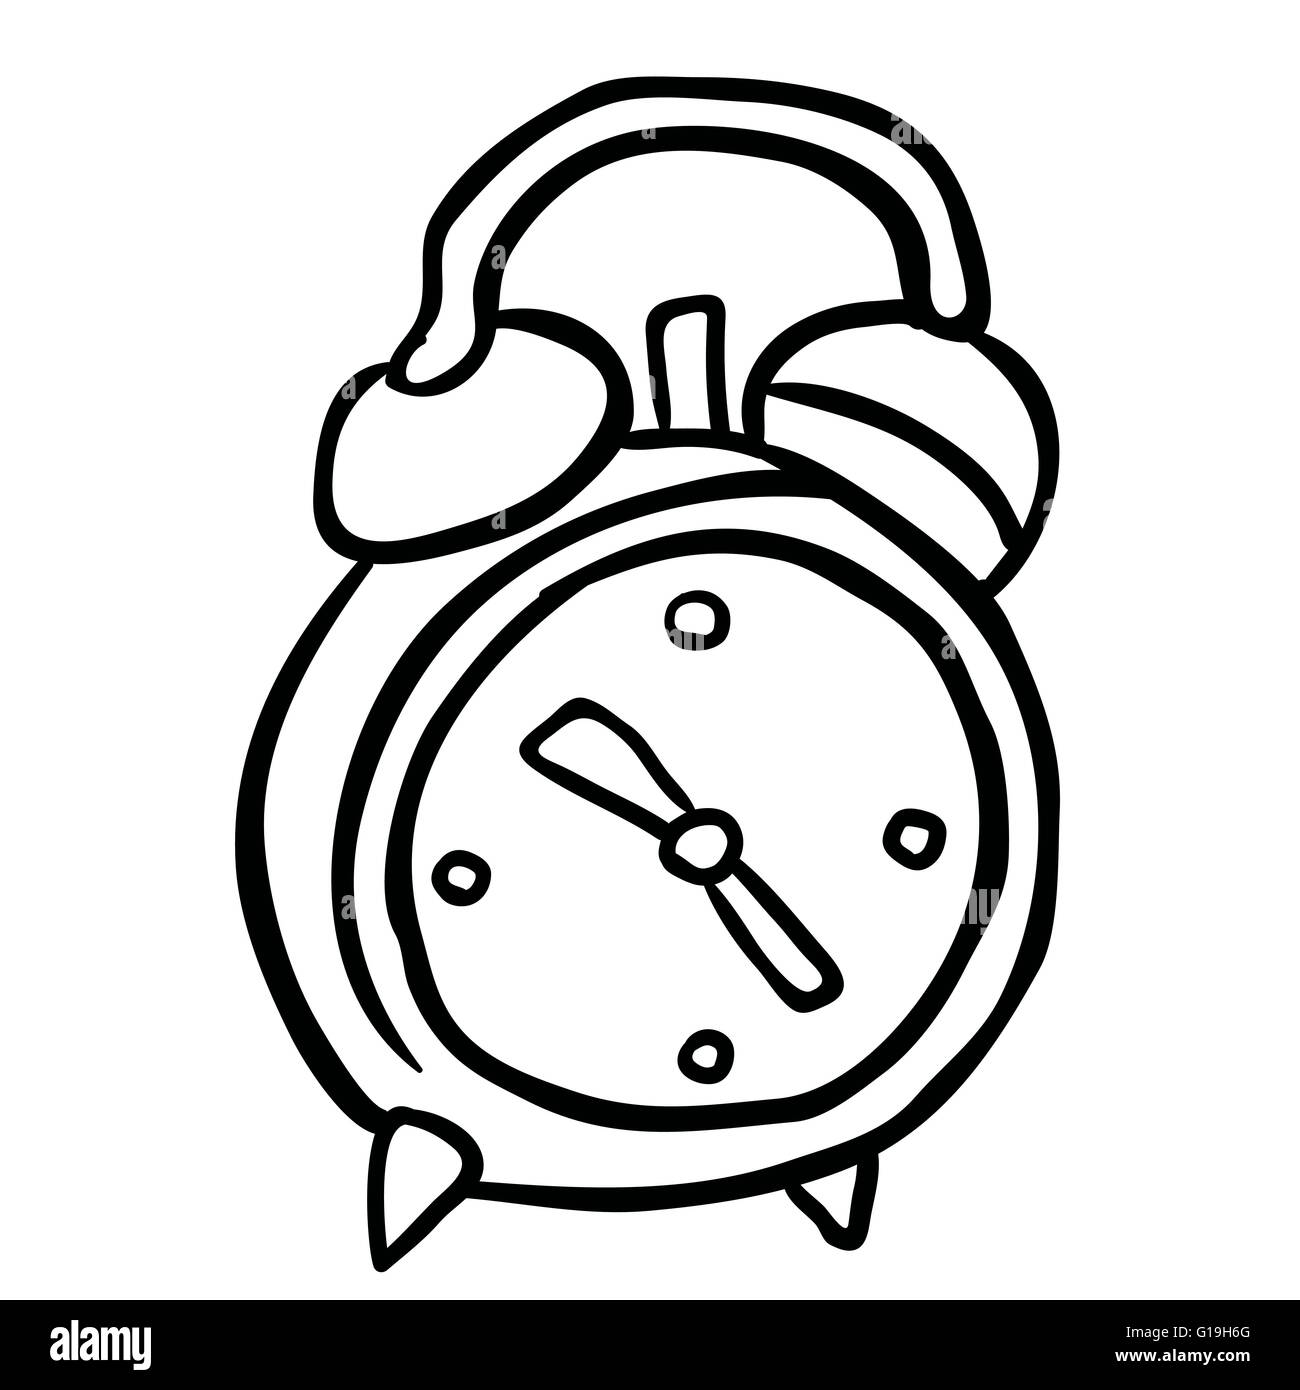 simple black and white alarm clock cartoon Stock Vector